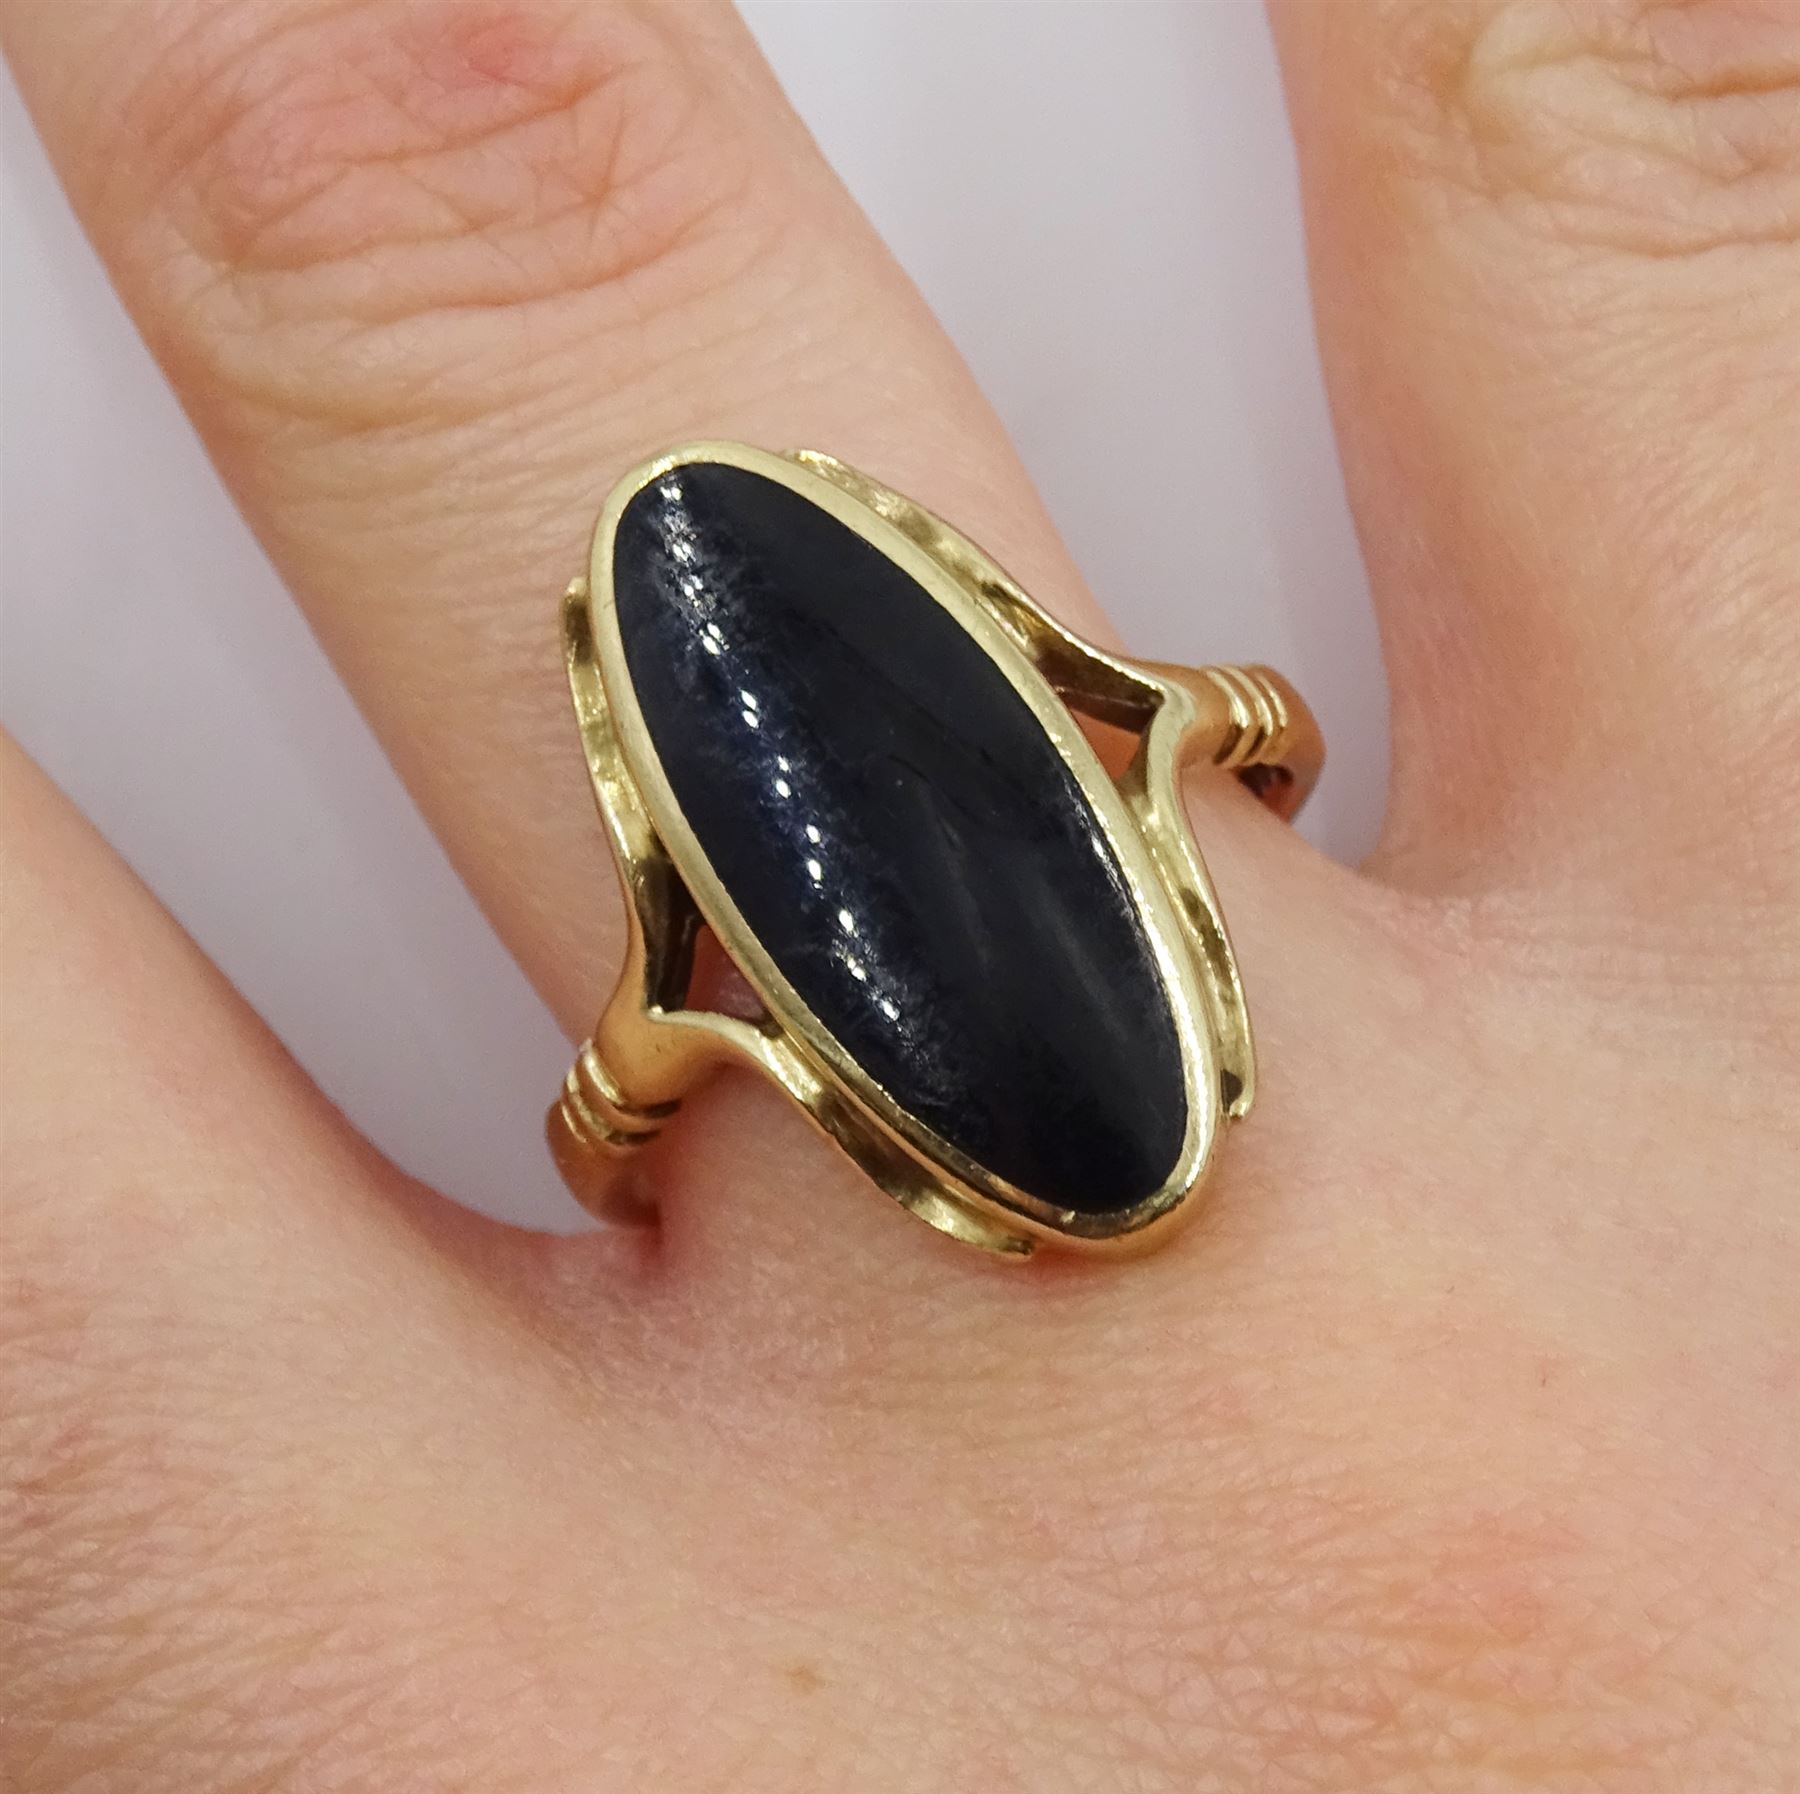 9ct gold single stone oval black onyx ring - Image 2 of 4